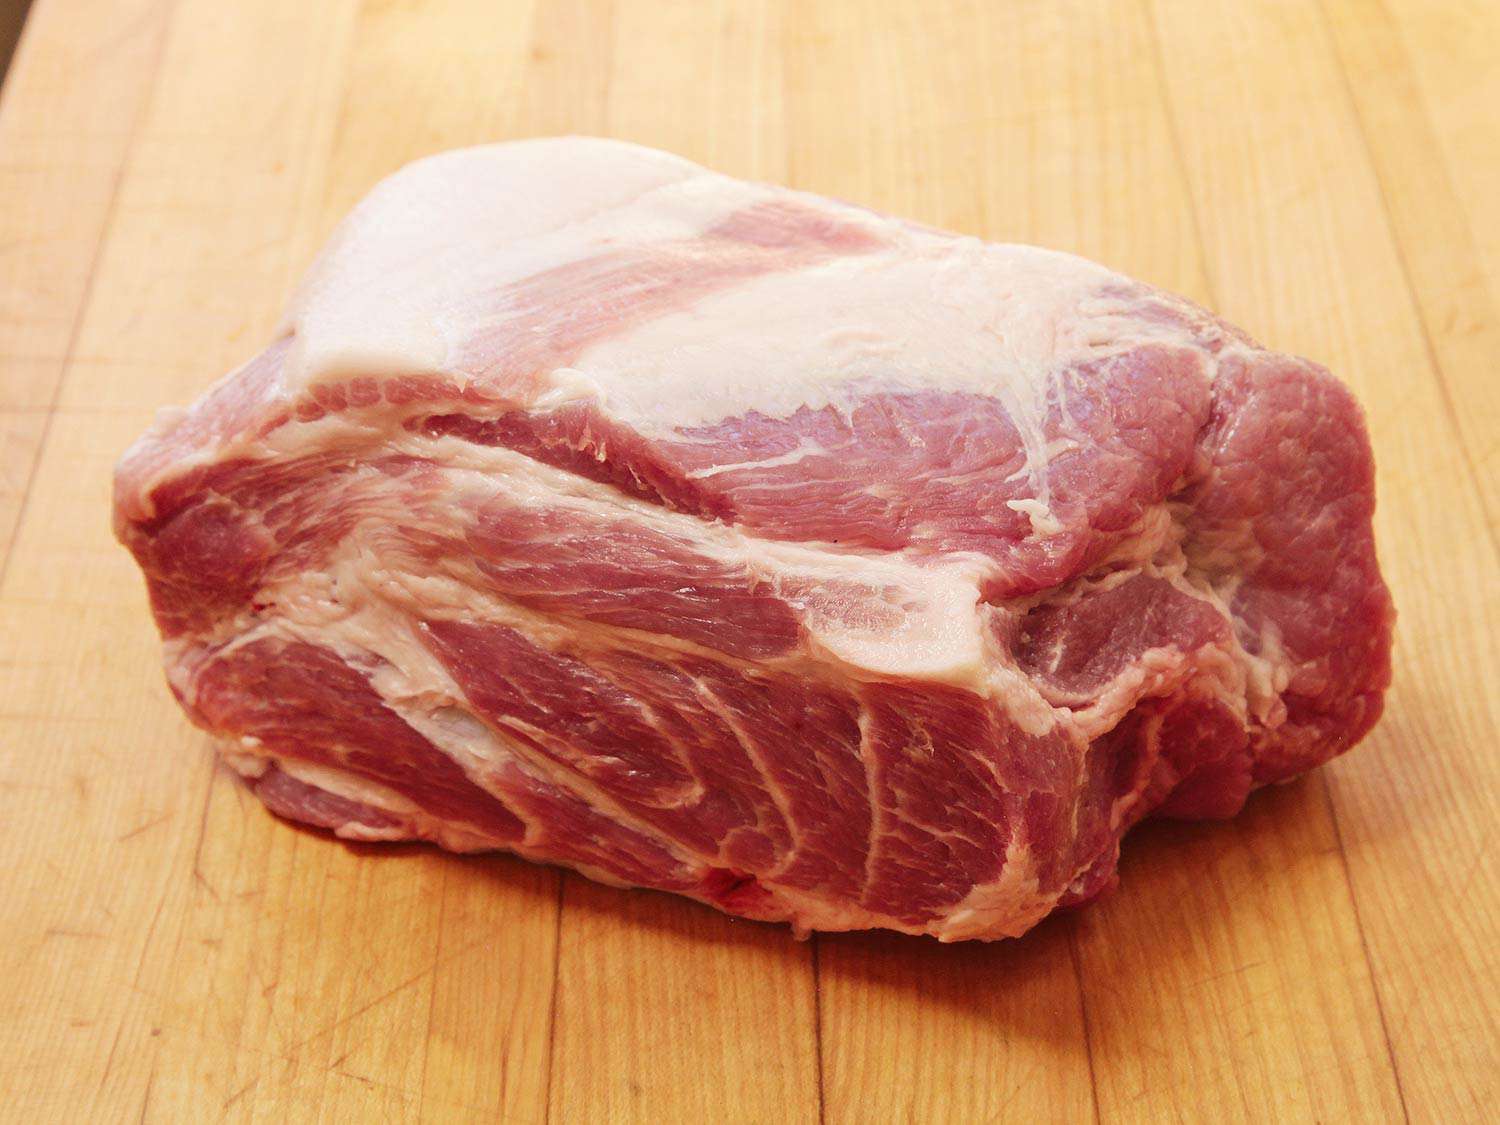 Raw pork shoulder, ready for roasting.